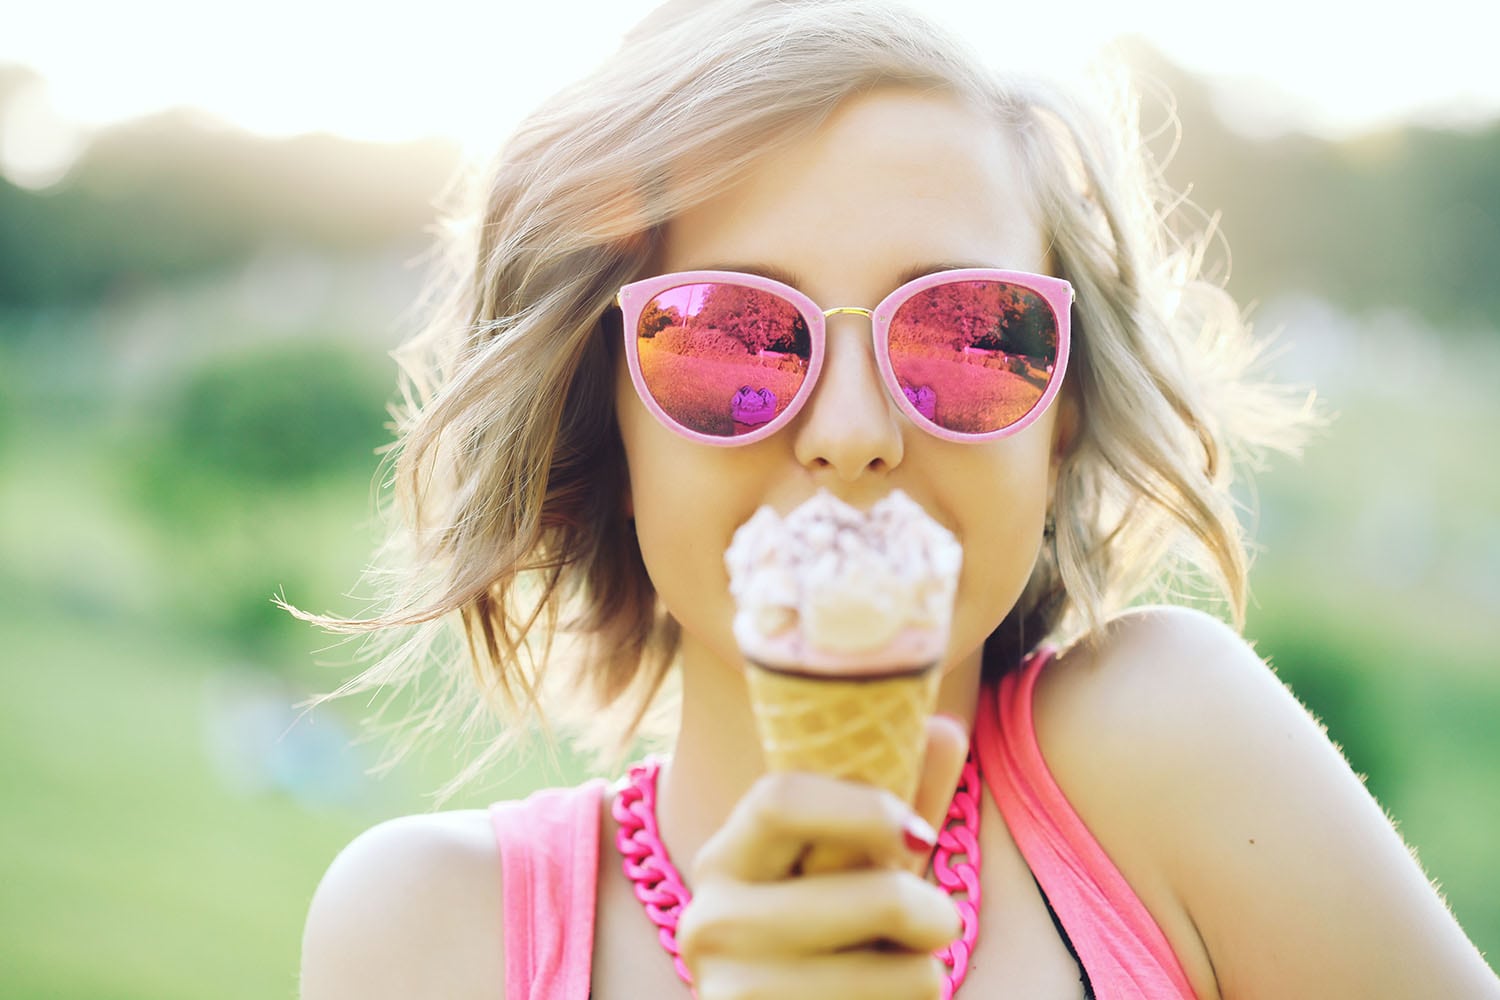 Teenager Eating Ice Cream